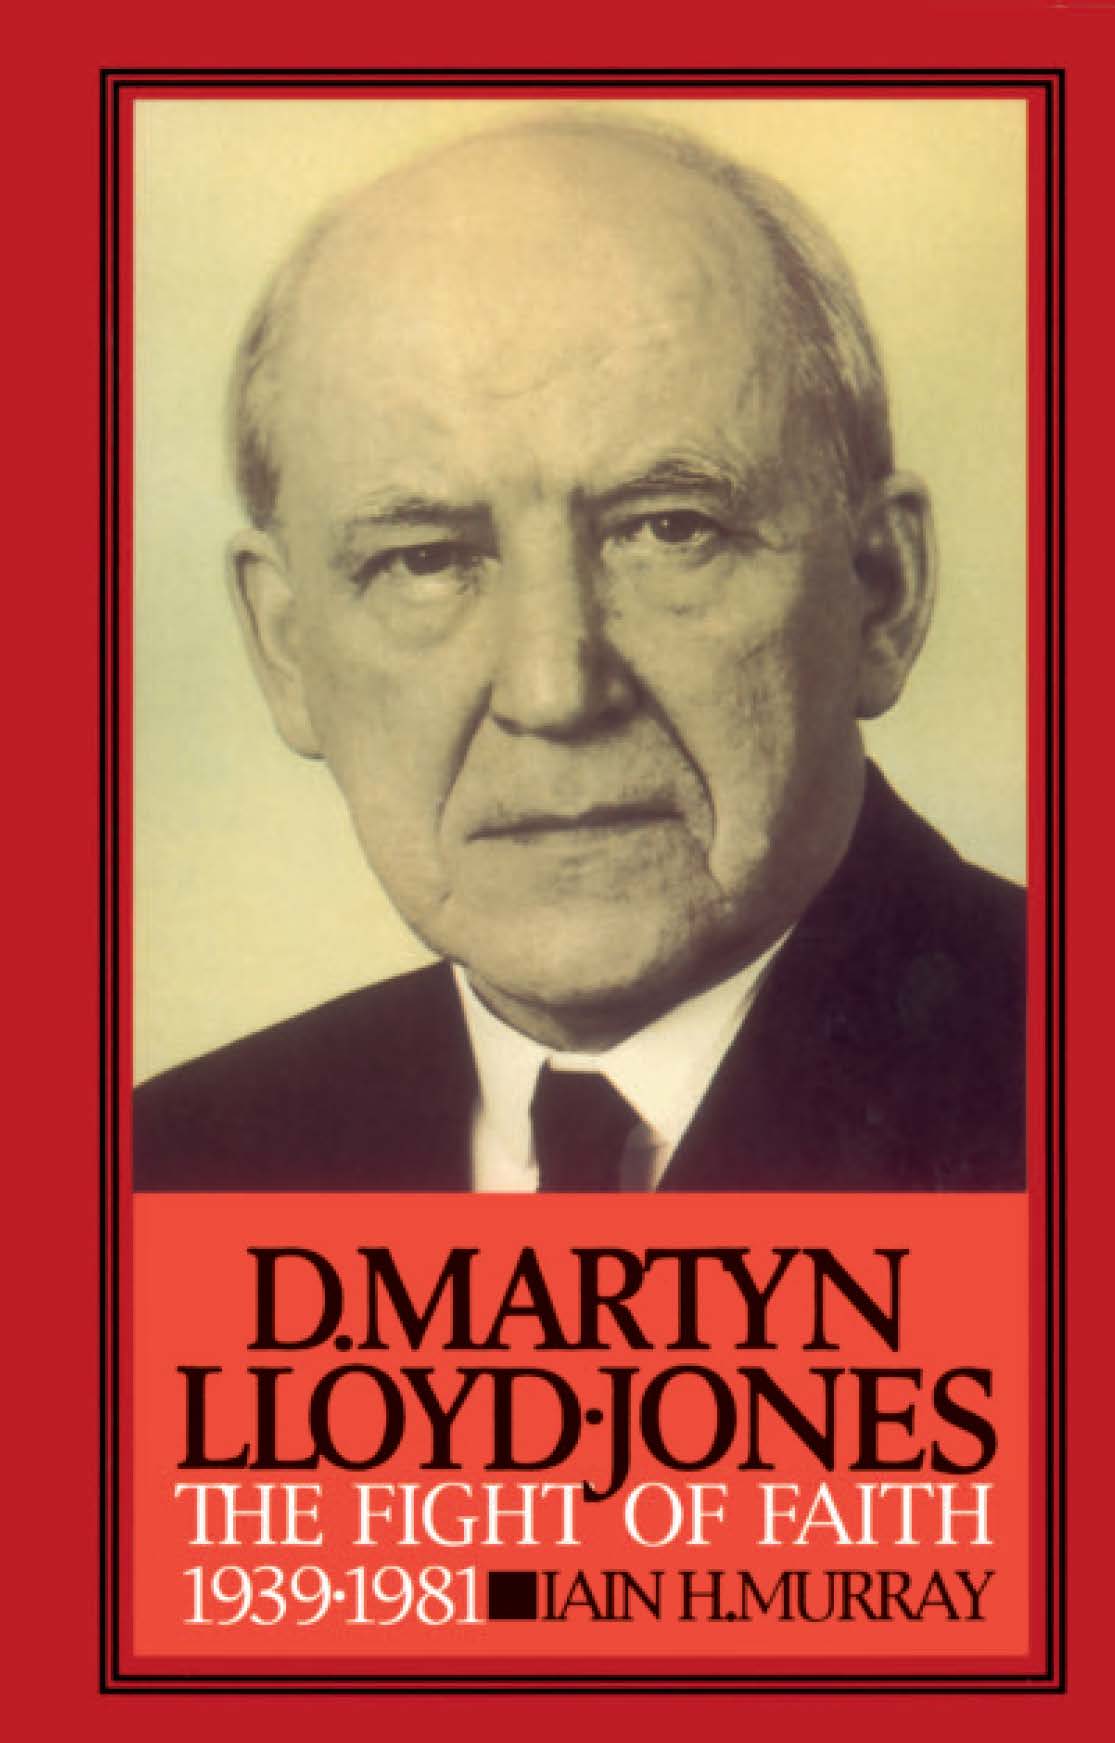 Life Of D Martyn Lloyd-Jones